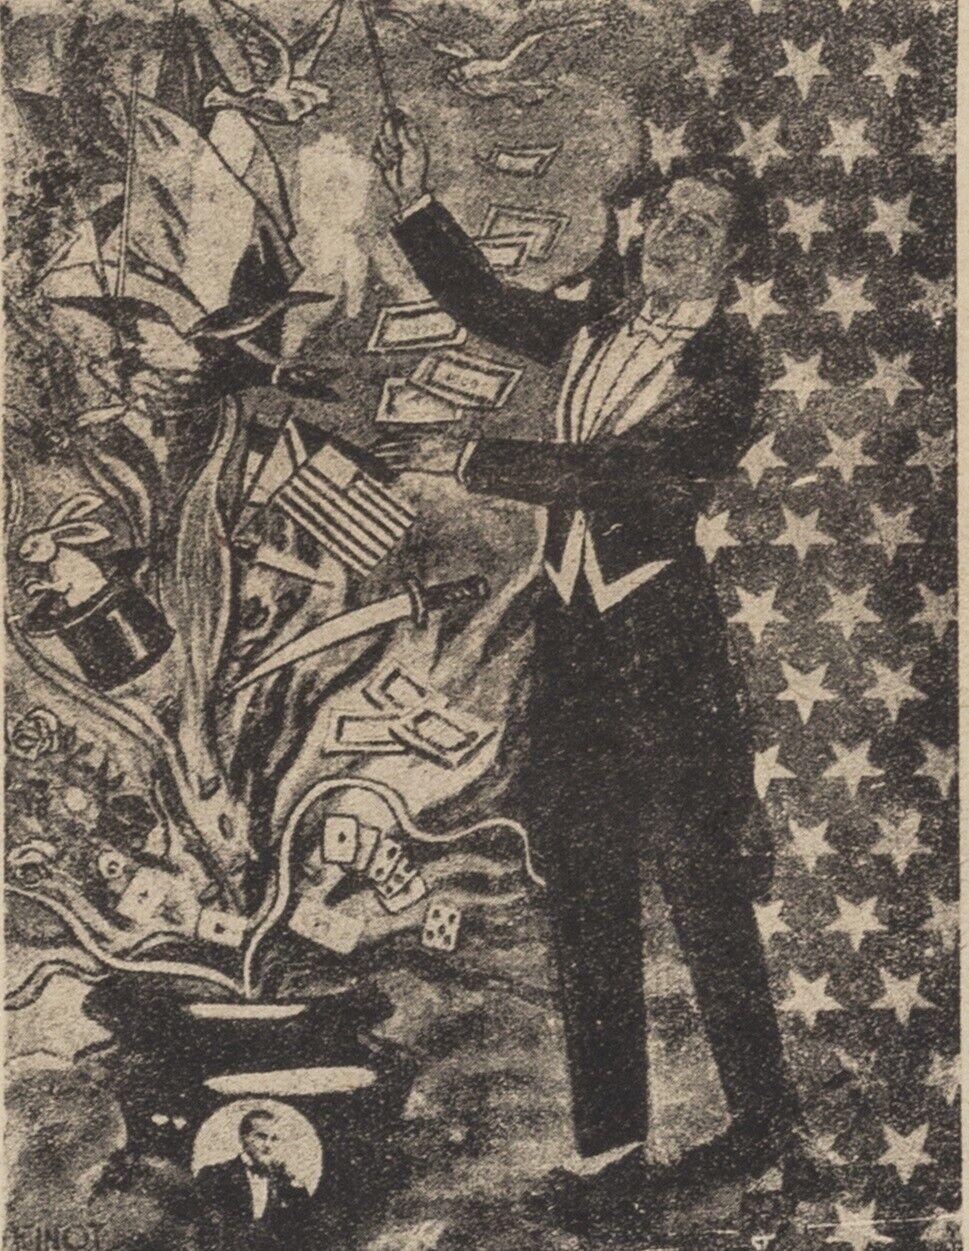 French Nicolitch, Original Vintage Poster, Levallier, Magic Show Tour, c. 1940 For Sale